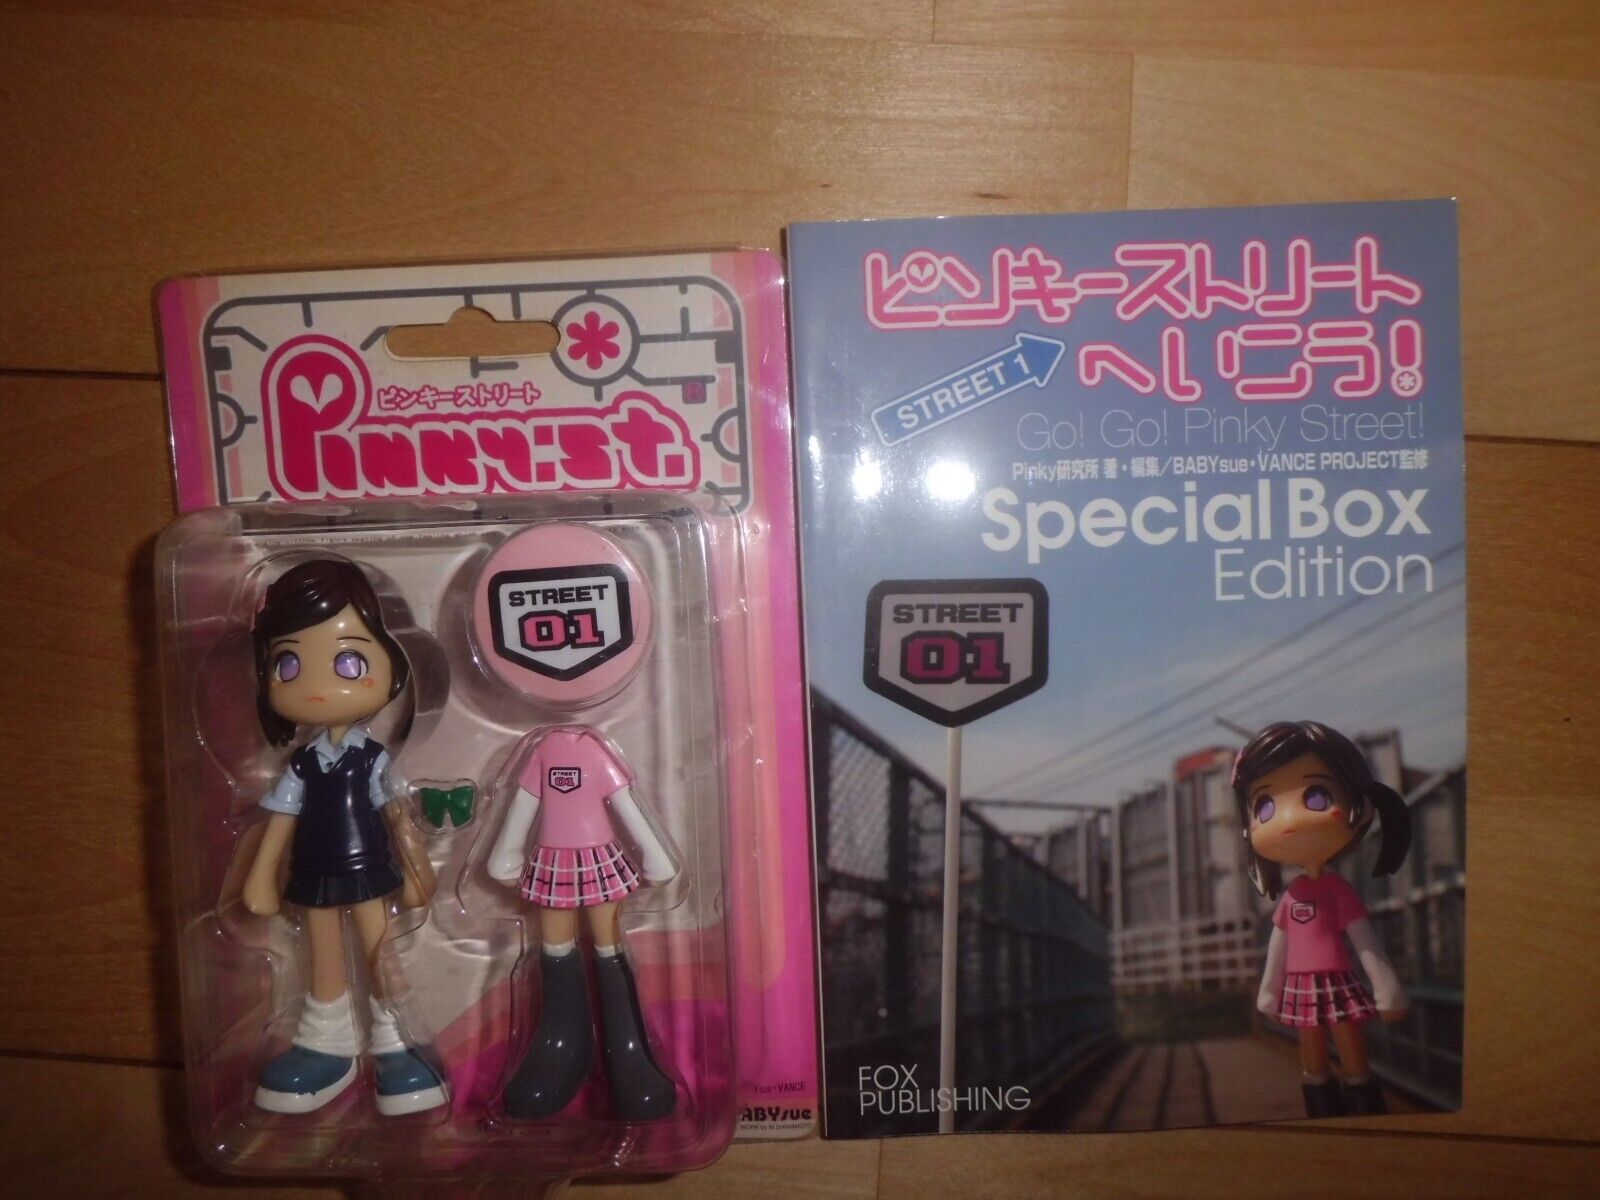 Pinky St Street Go Go Pinky Street Special Box Edition Pop Vinyl Toy Figure